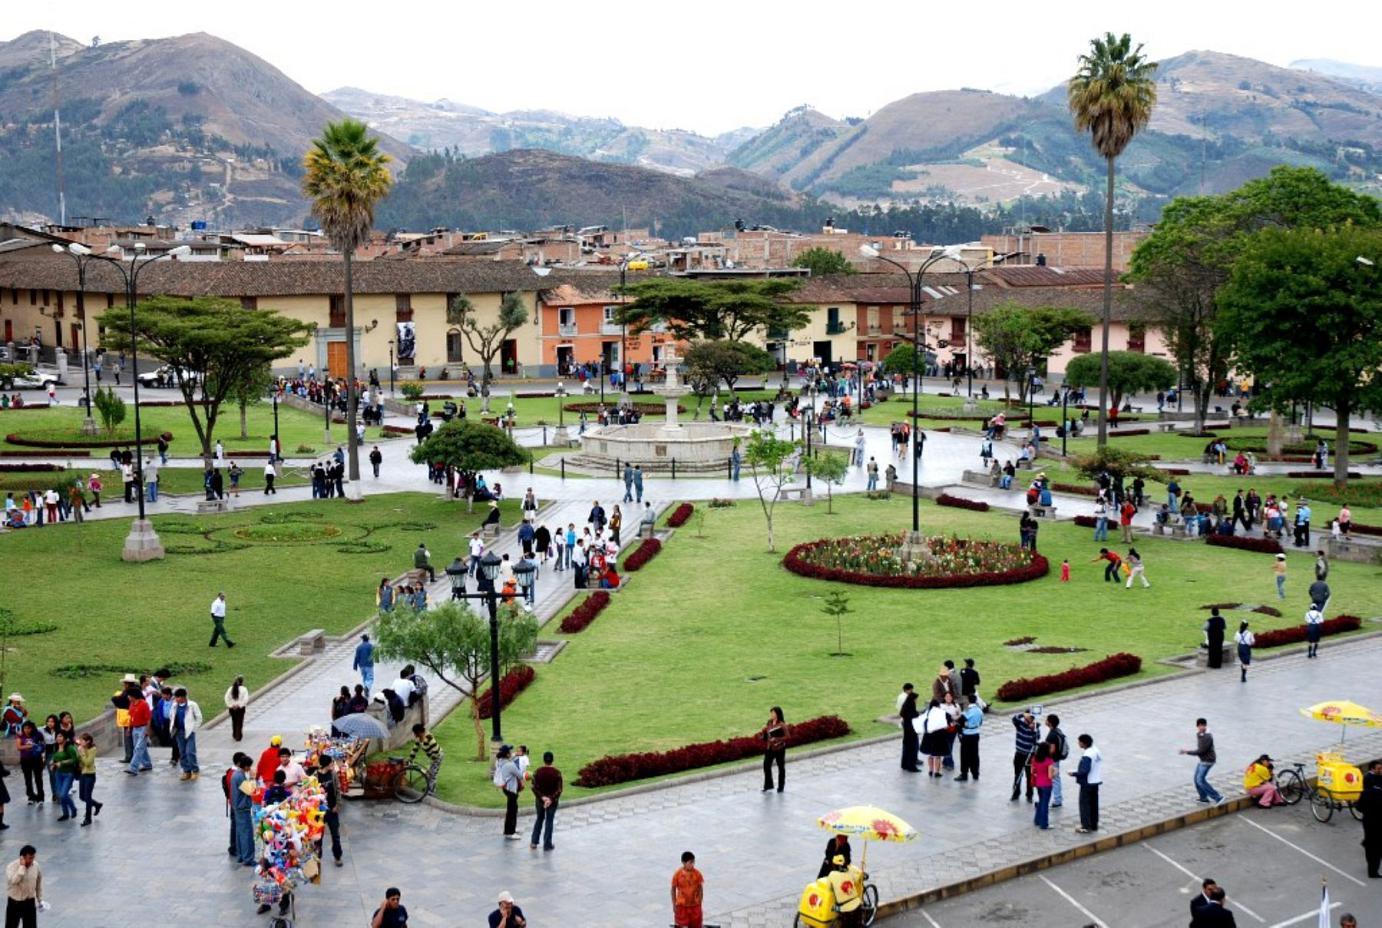 Cajamarca 1